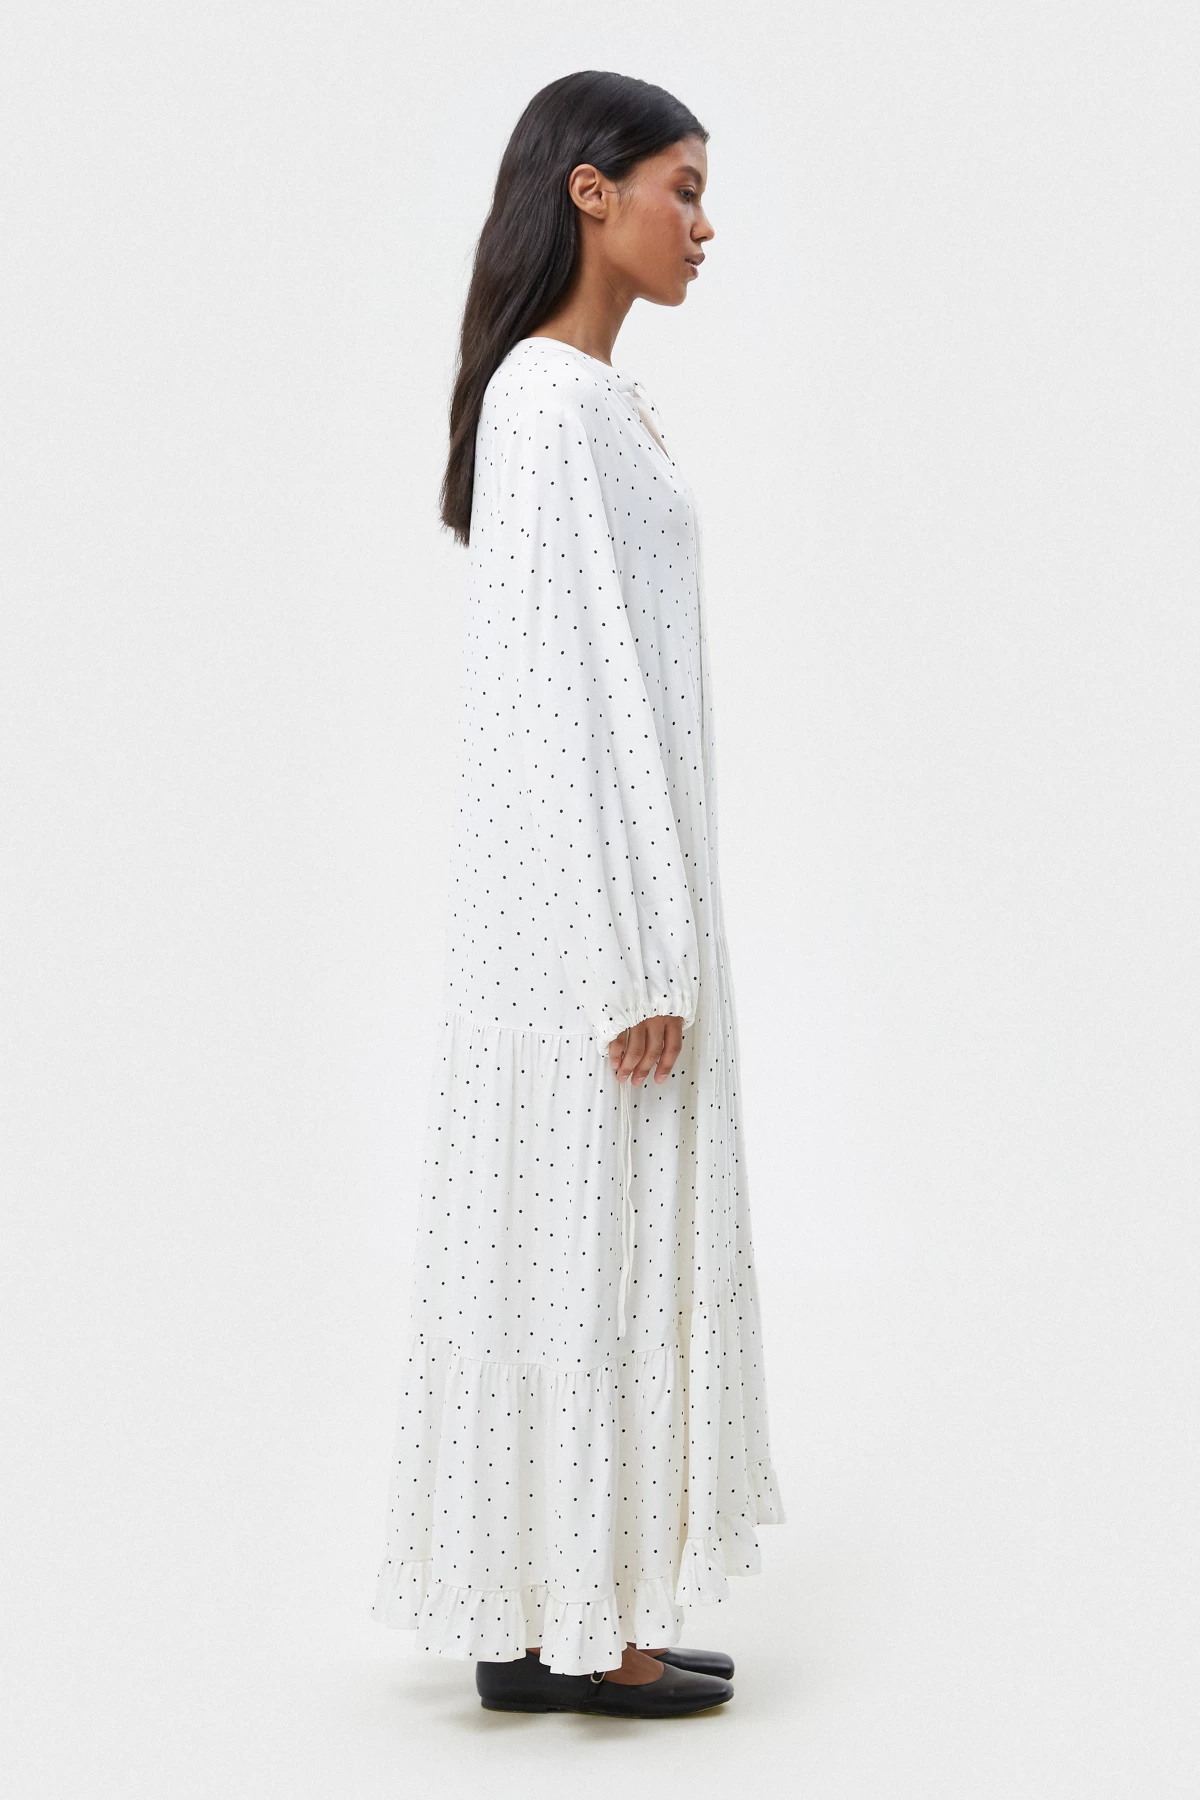 Milky viscose elongated midi dress with polka dot print, photo 3